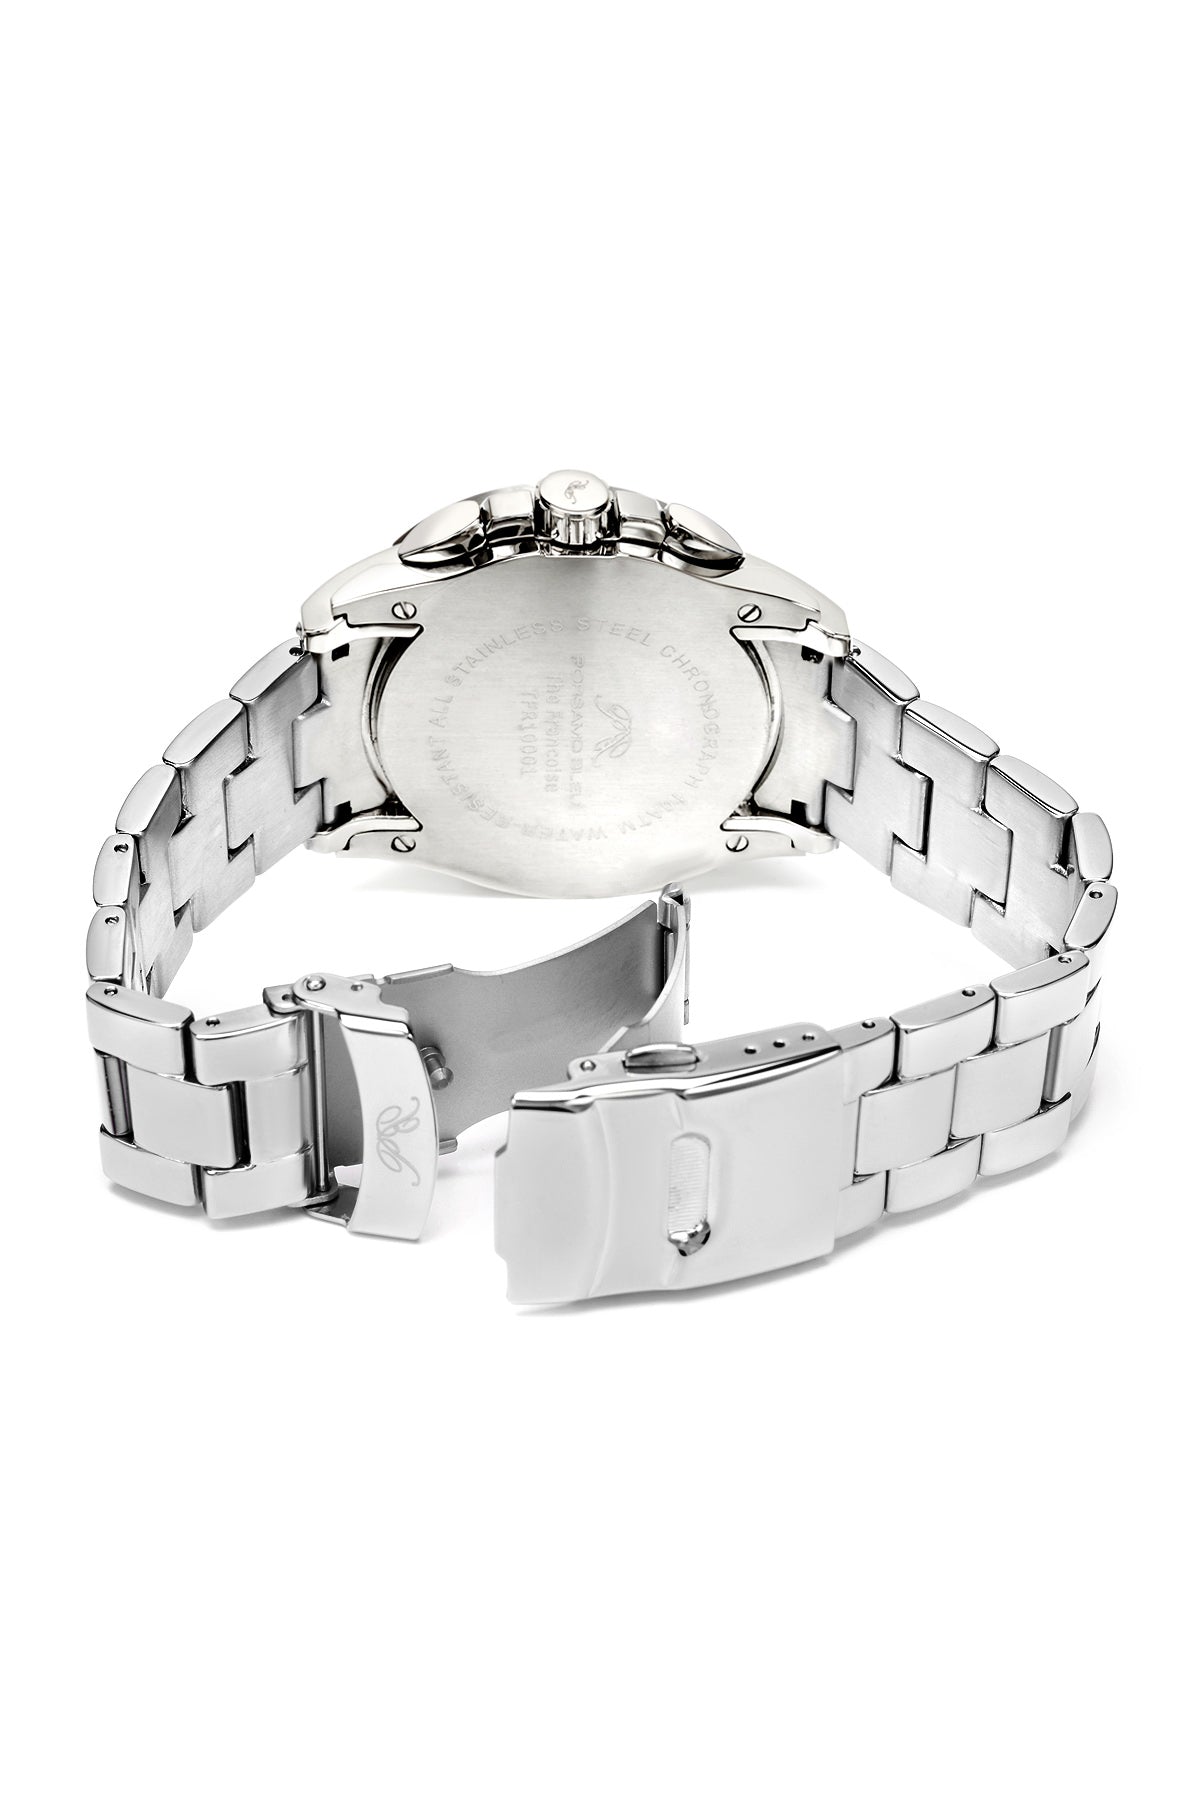 Porsamo Bleu Francoise Luxury Chronograph Men's Stainless Steel Watch, Silver, White 242AFRS